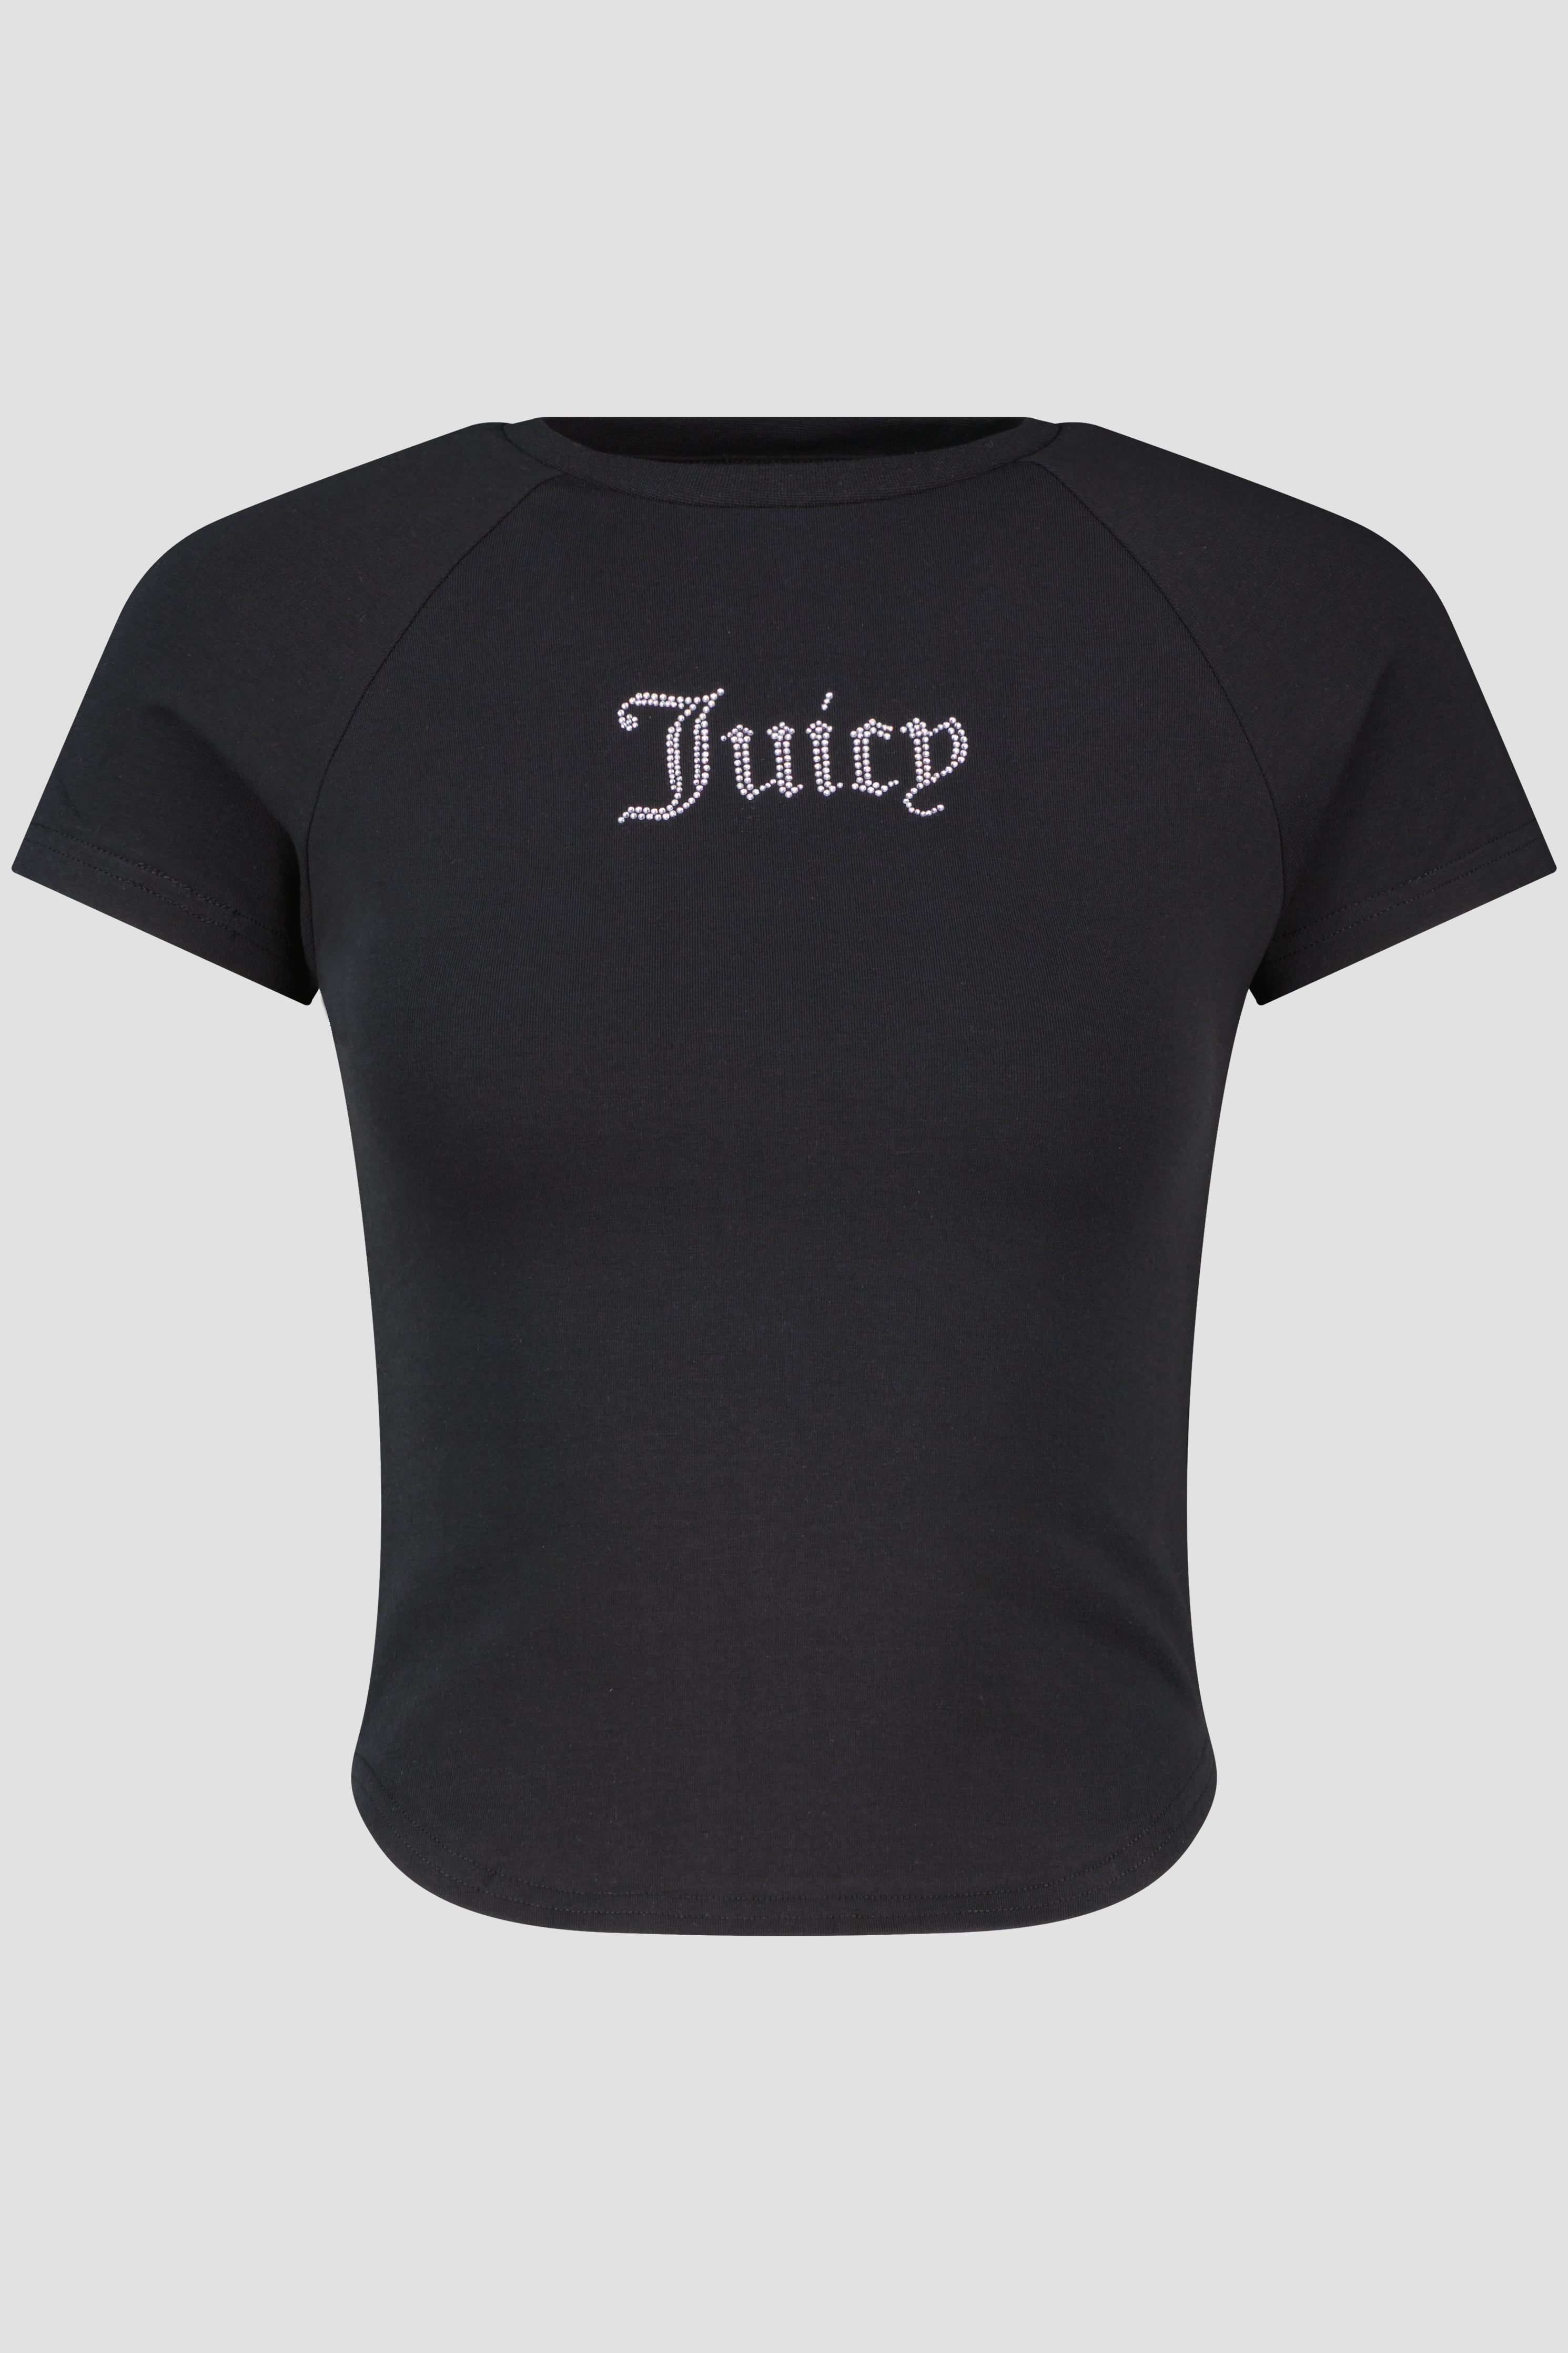 Women's Juicy Couture Shrunken Diamante Black T Shirt